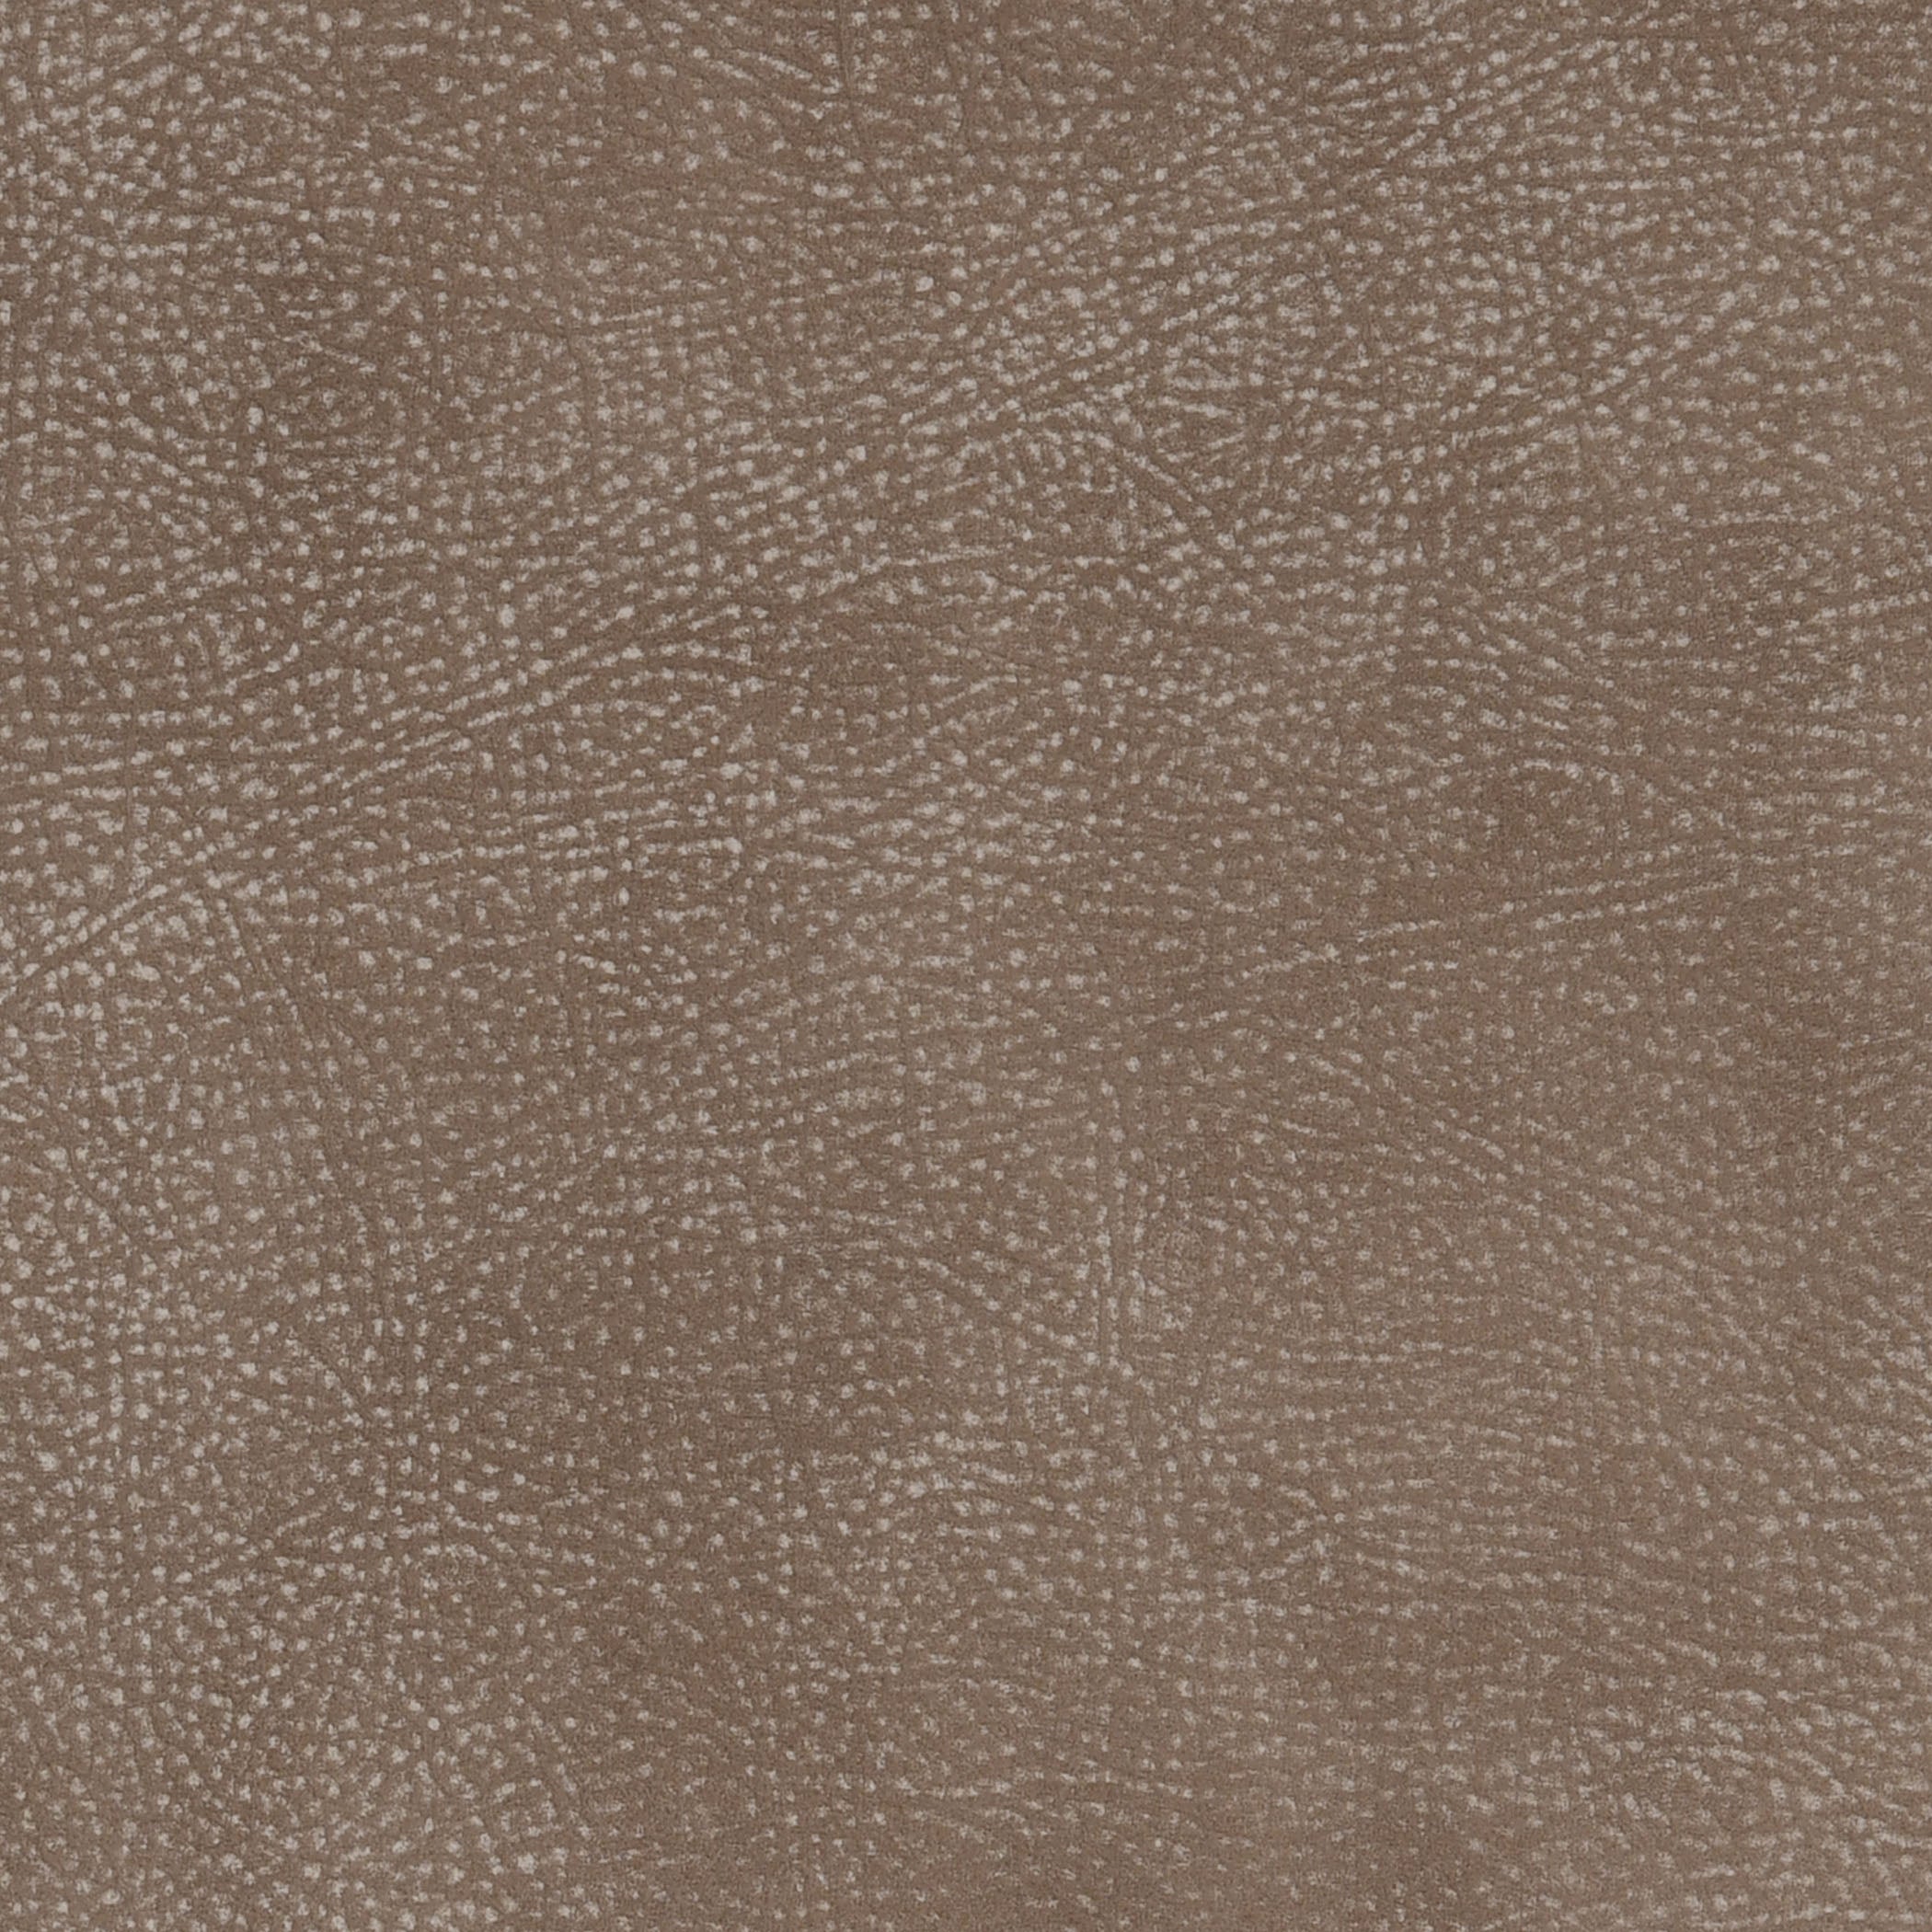 Sand Dollar-Buckeye Leather